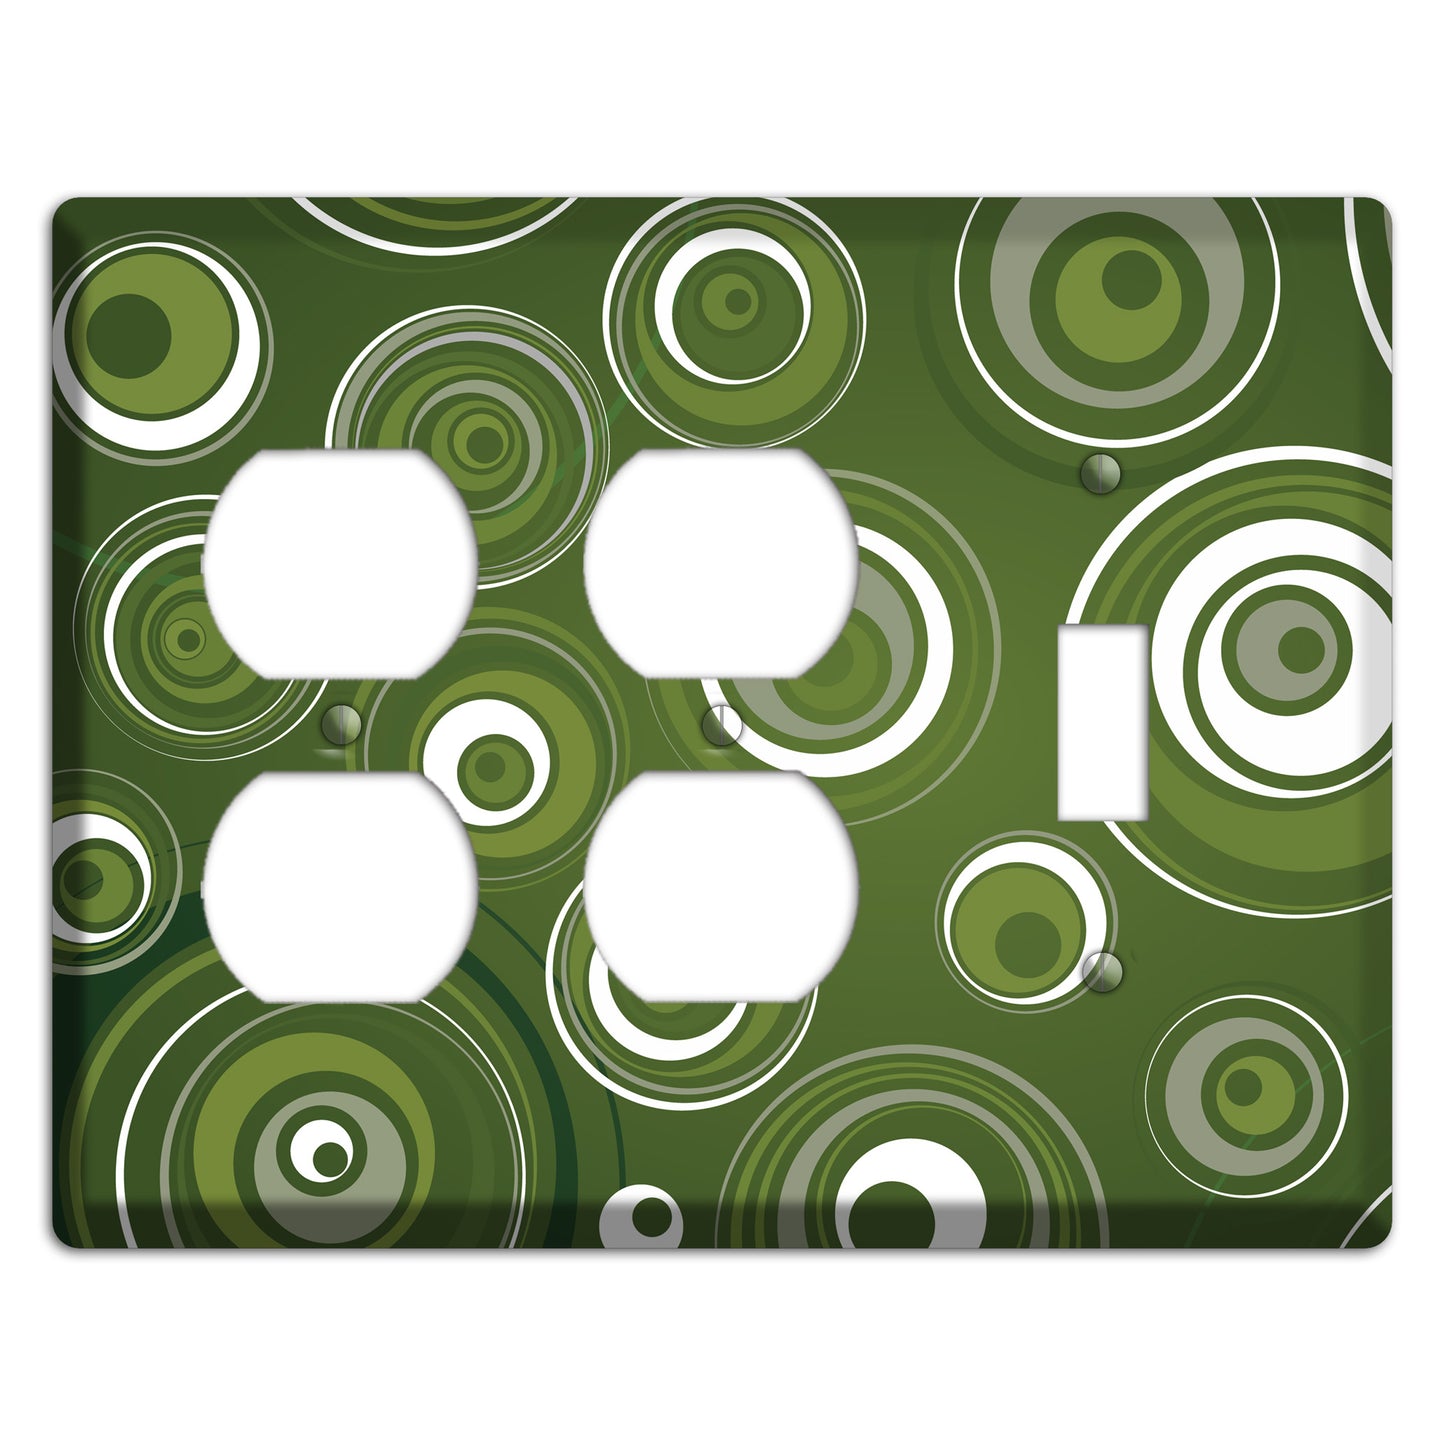 Green Circles 2 Duplex / Toggle Wallplate